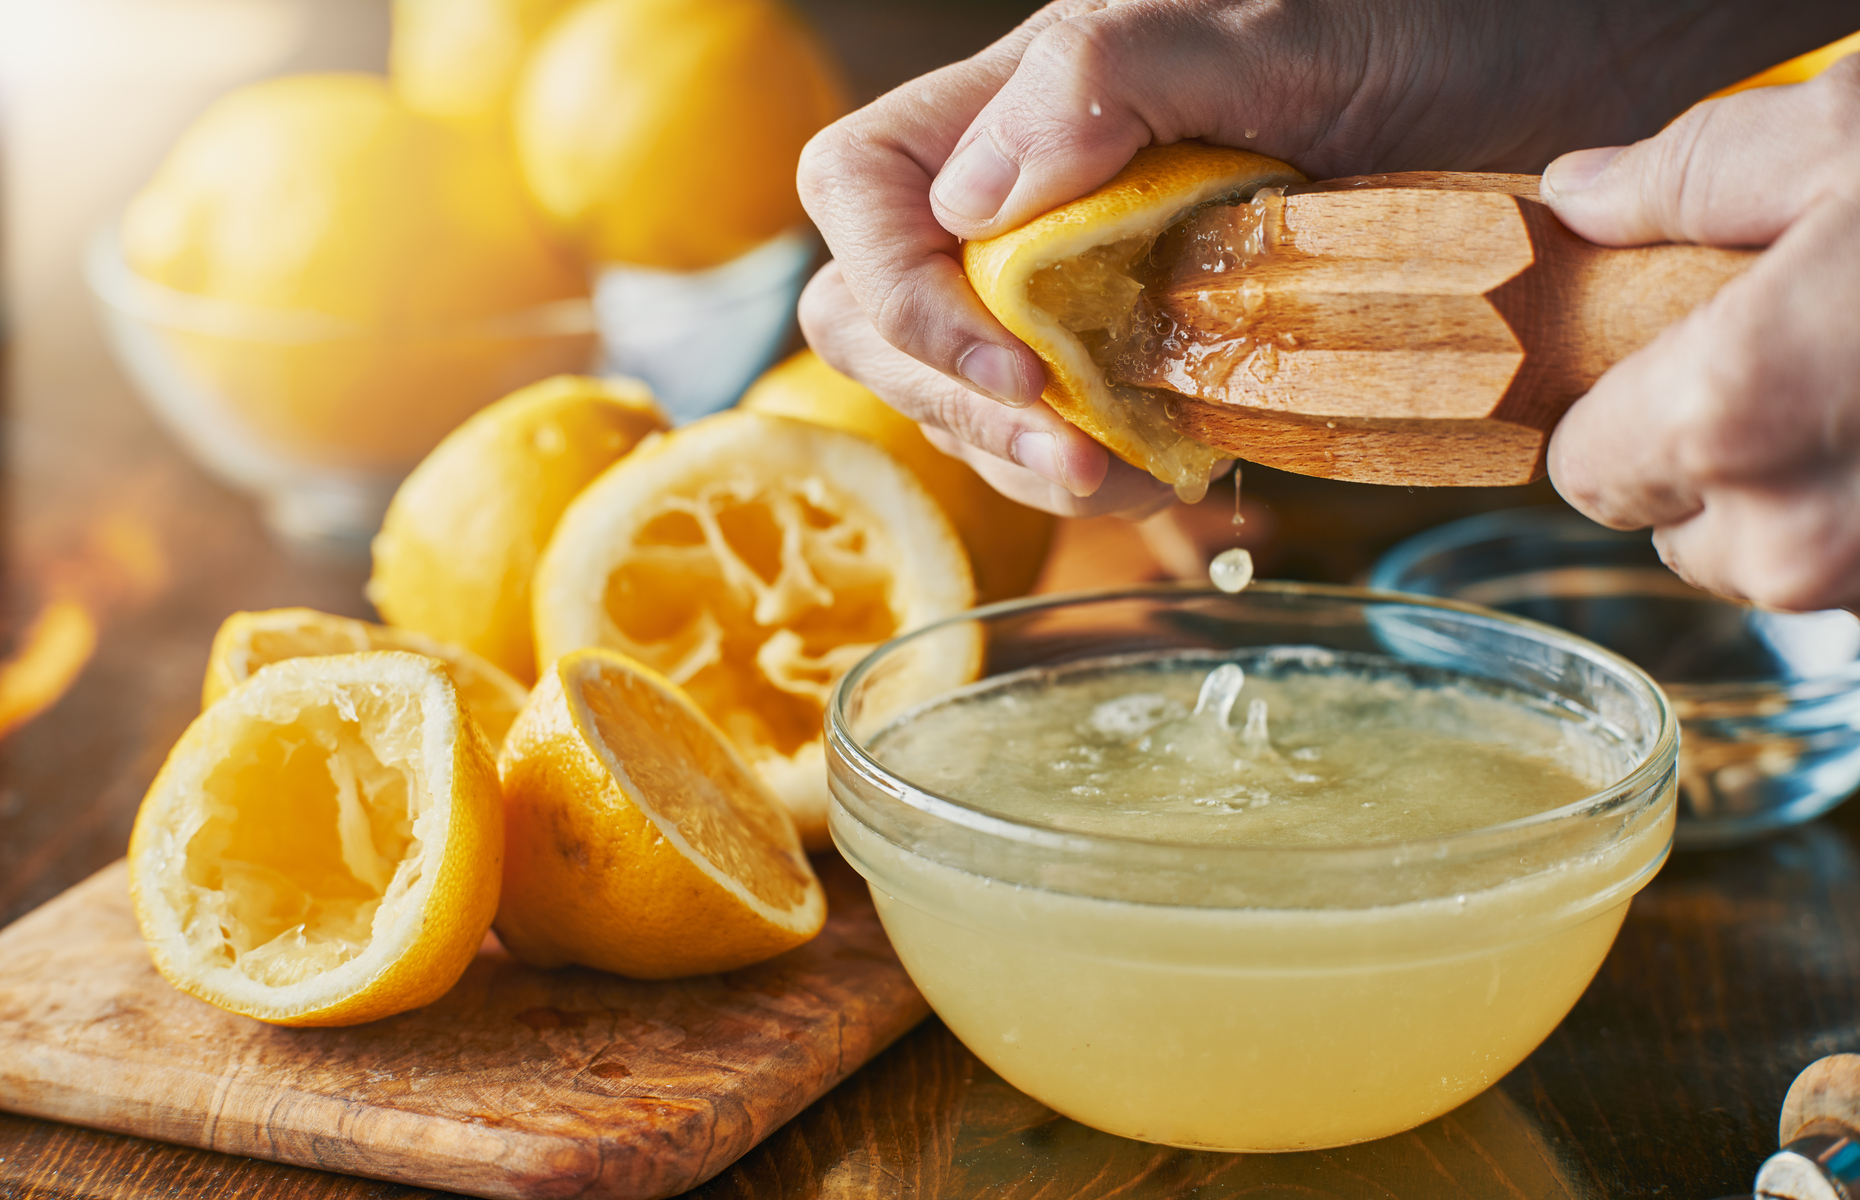 Juicing a lemon (Image: Joshua Resnick/Shutterstock)